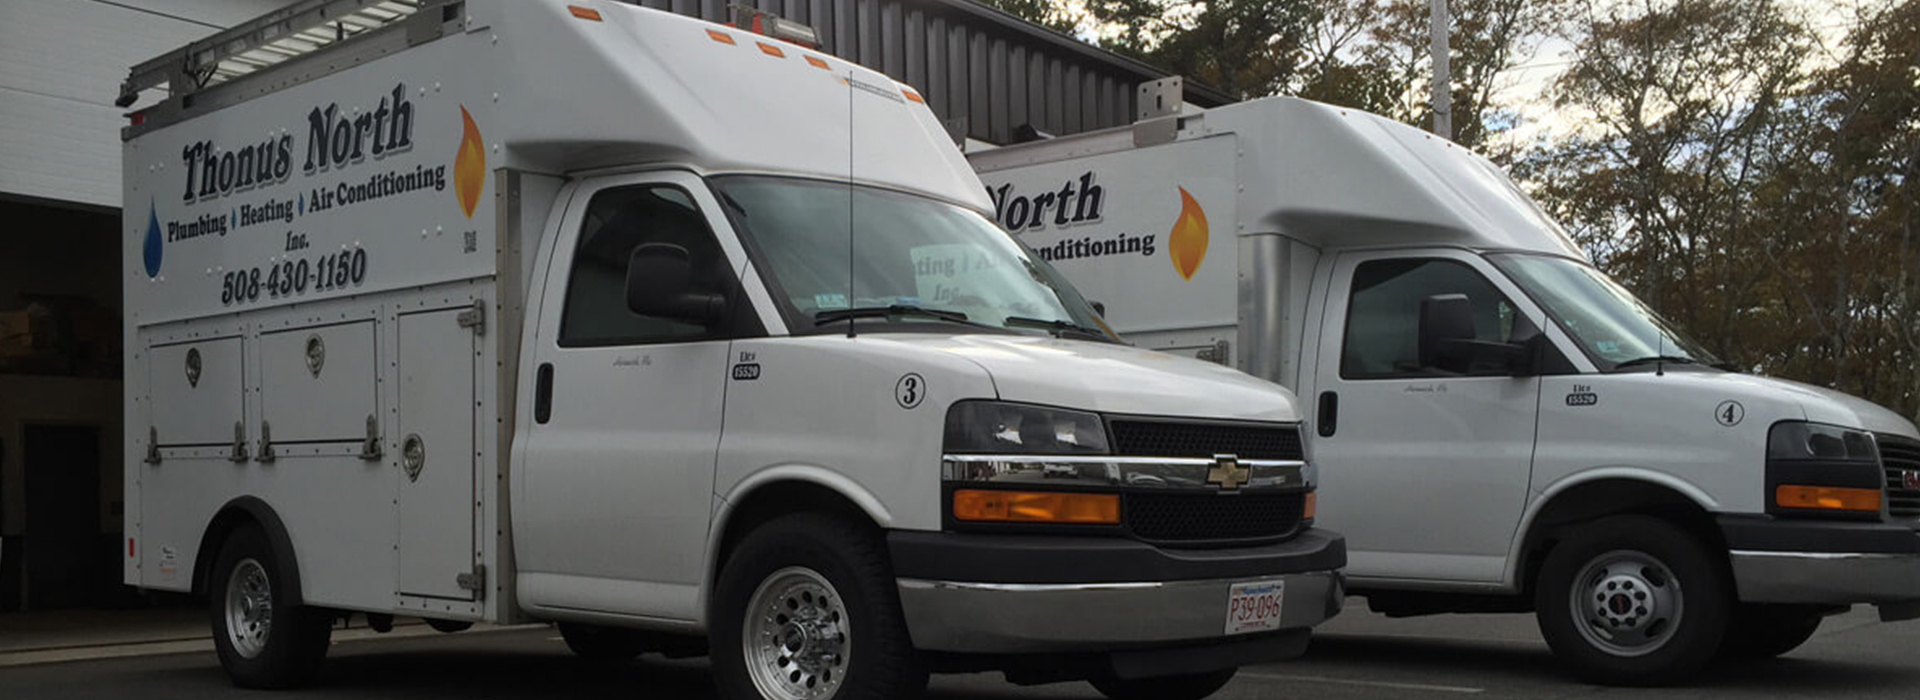 Thonus North Plumbing, Heating & Air Conditioning Trucks Parked